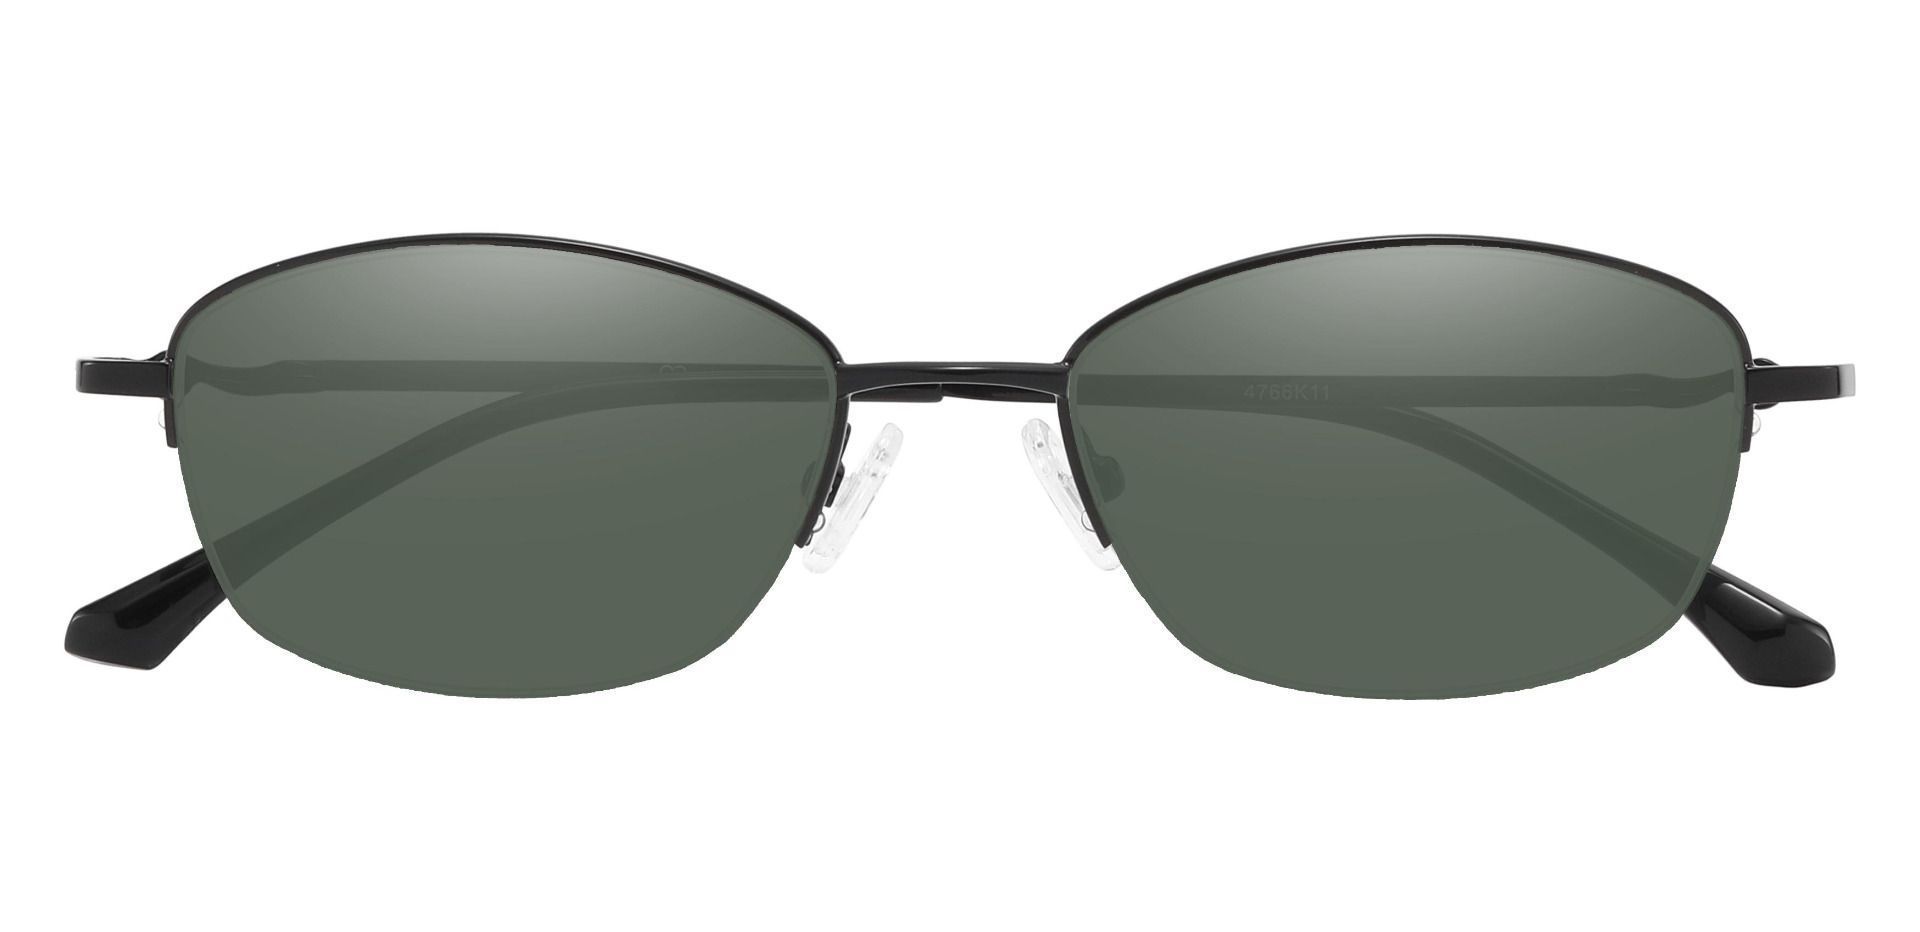 Beulah Oval Prescription Sunglasses - Black Frame With Green Lenses